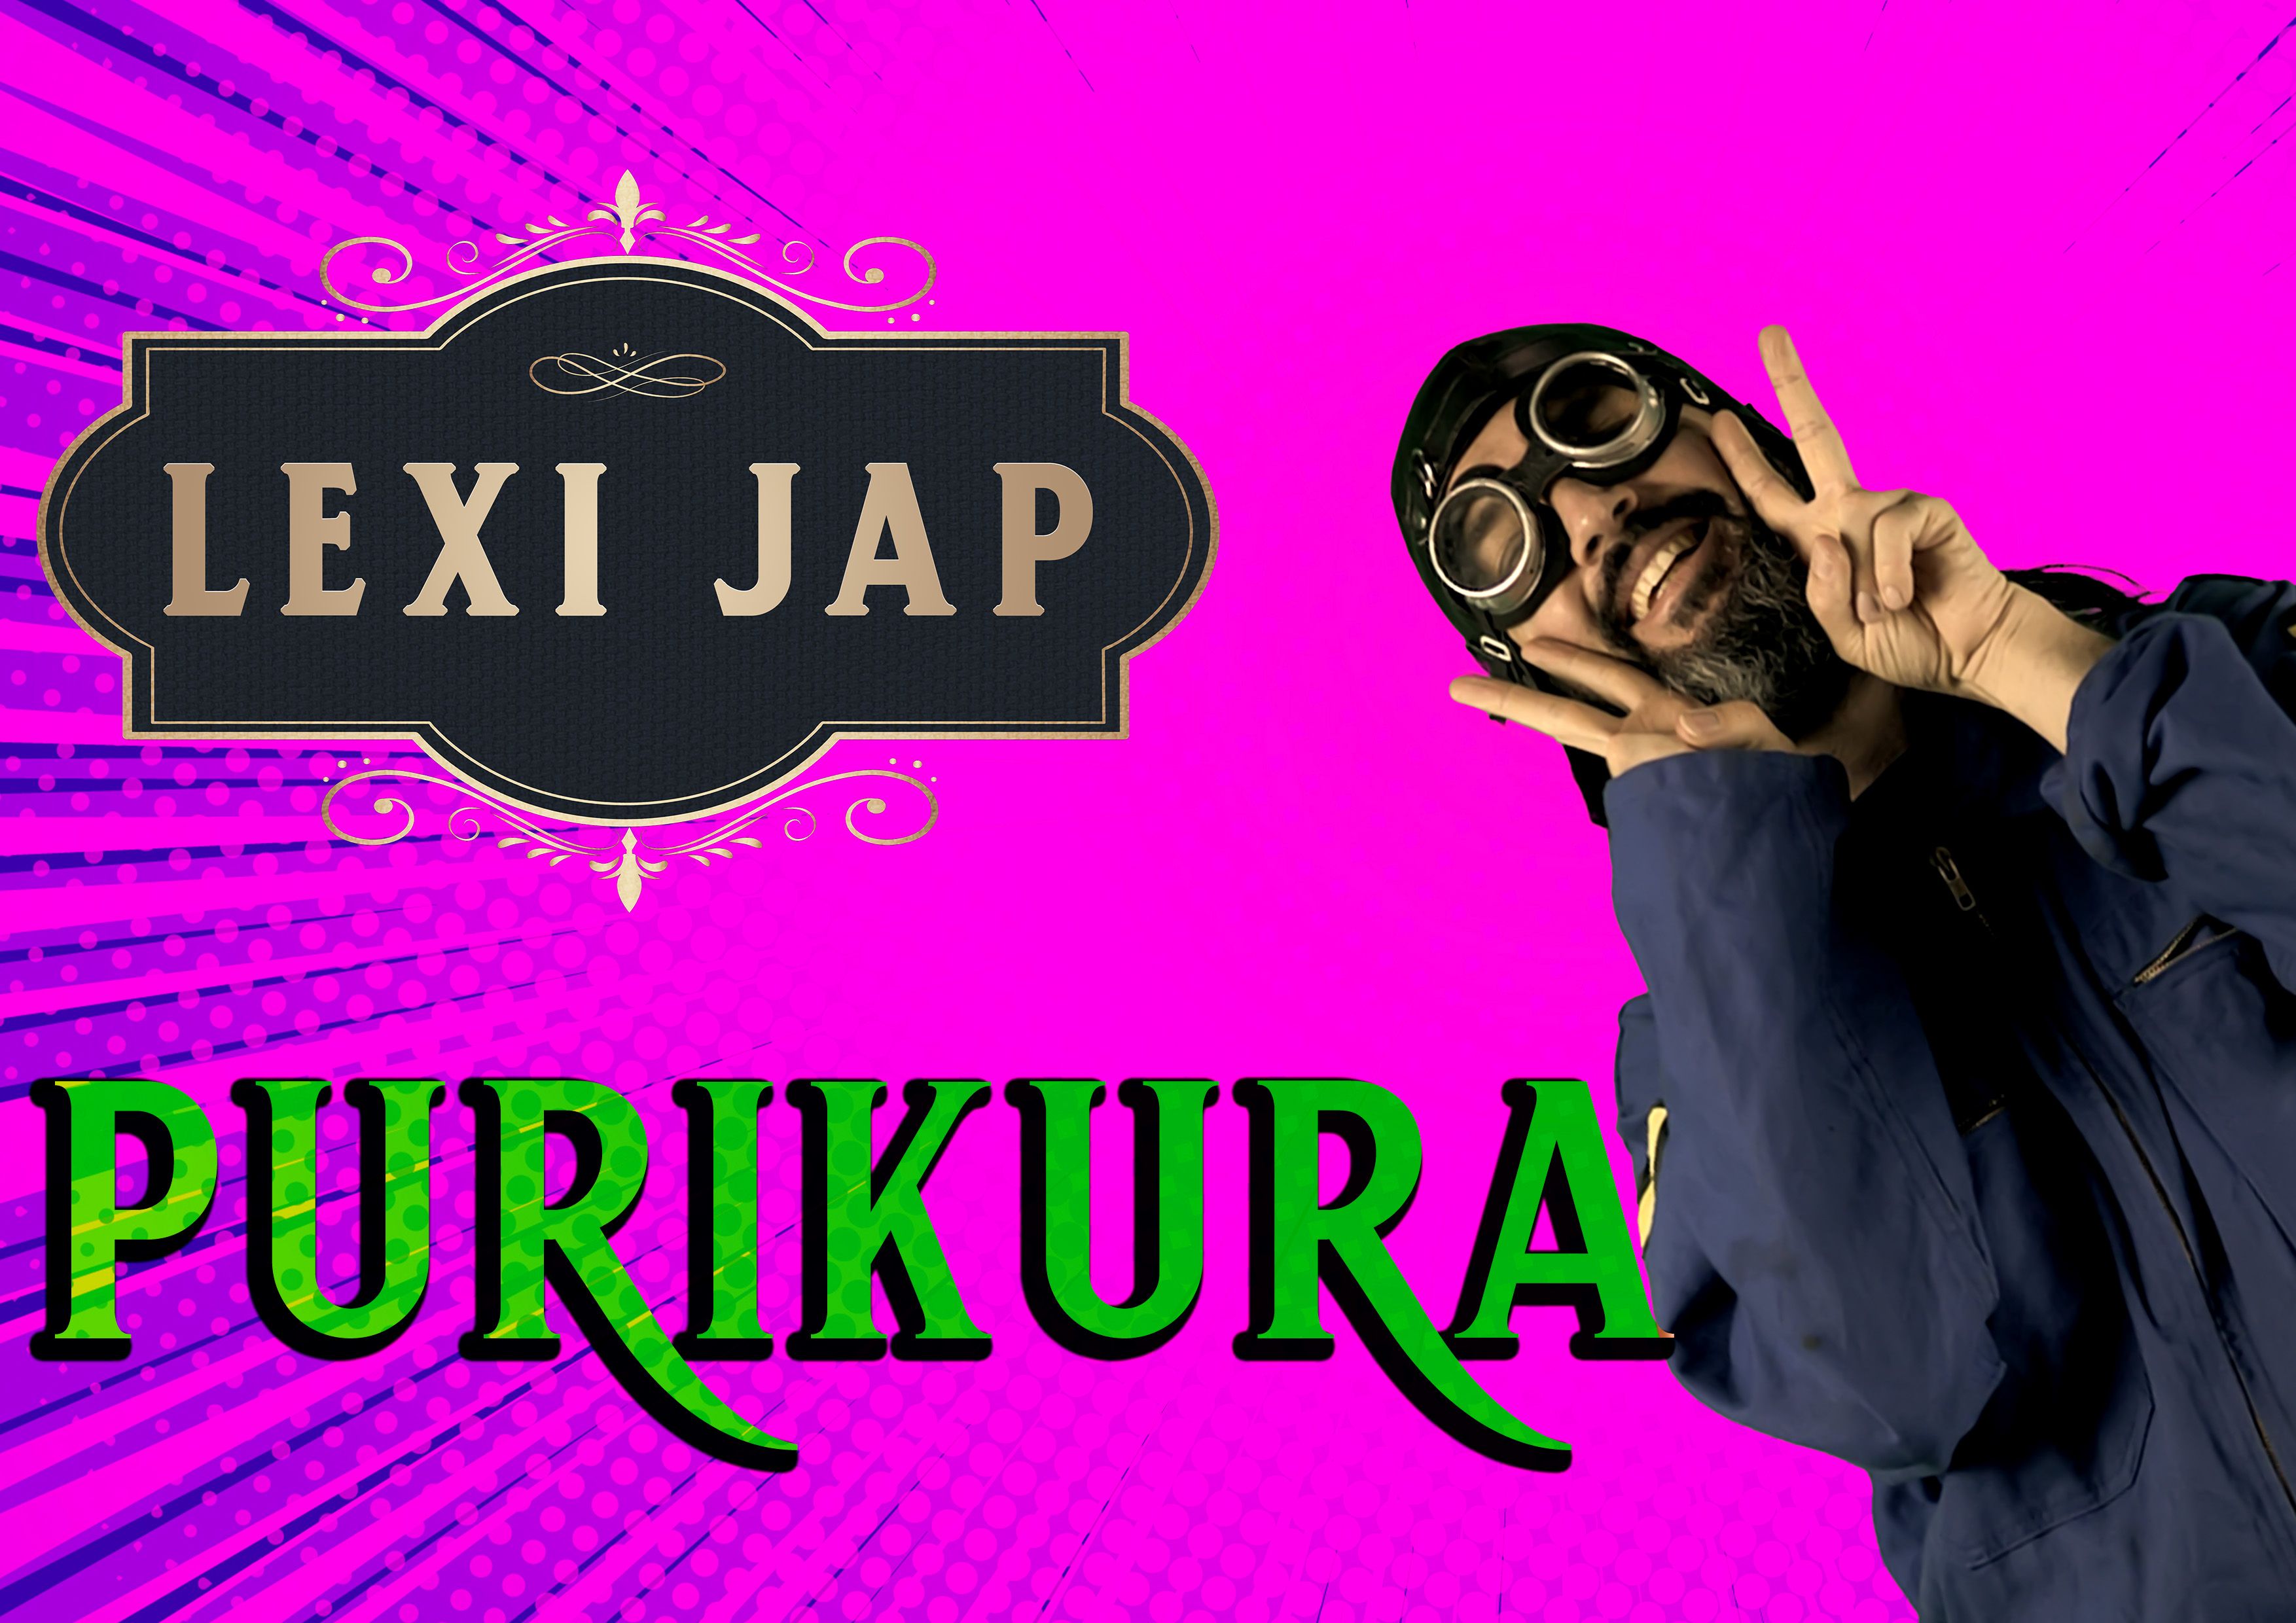 LexiJap-Purikura.jpg